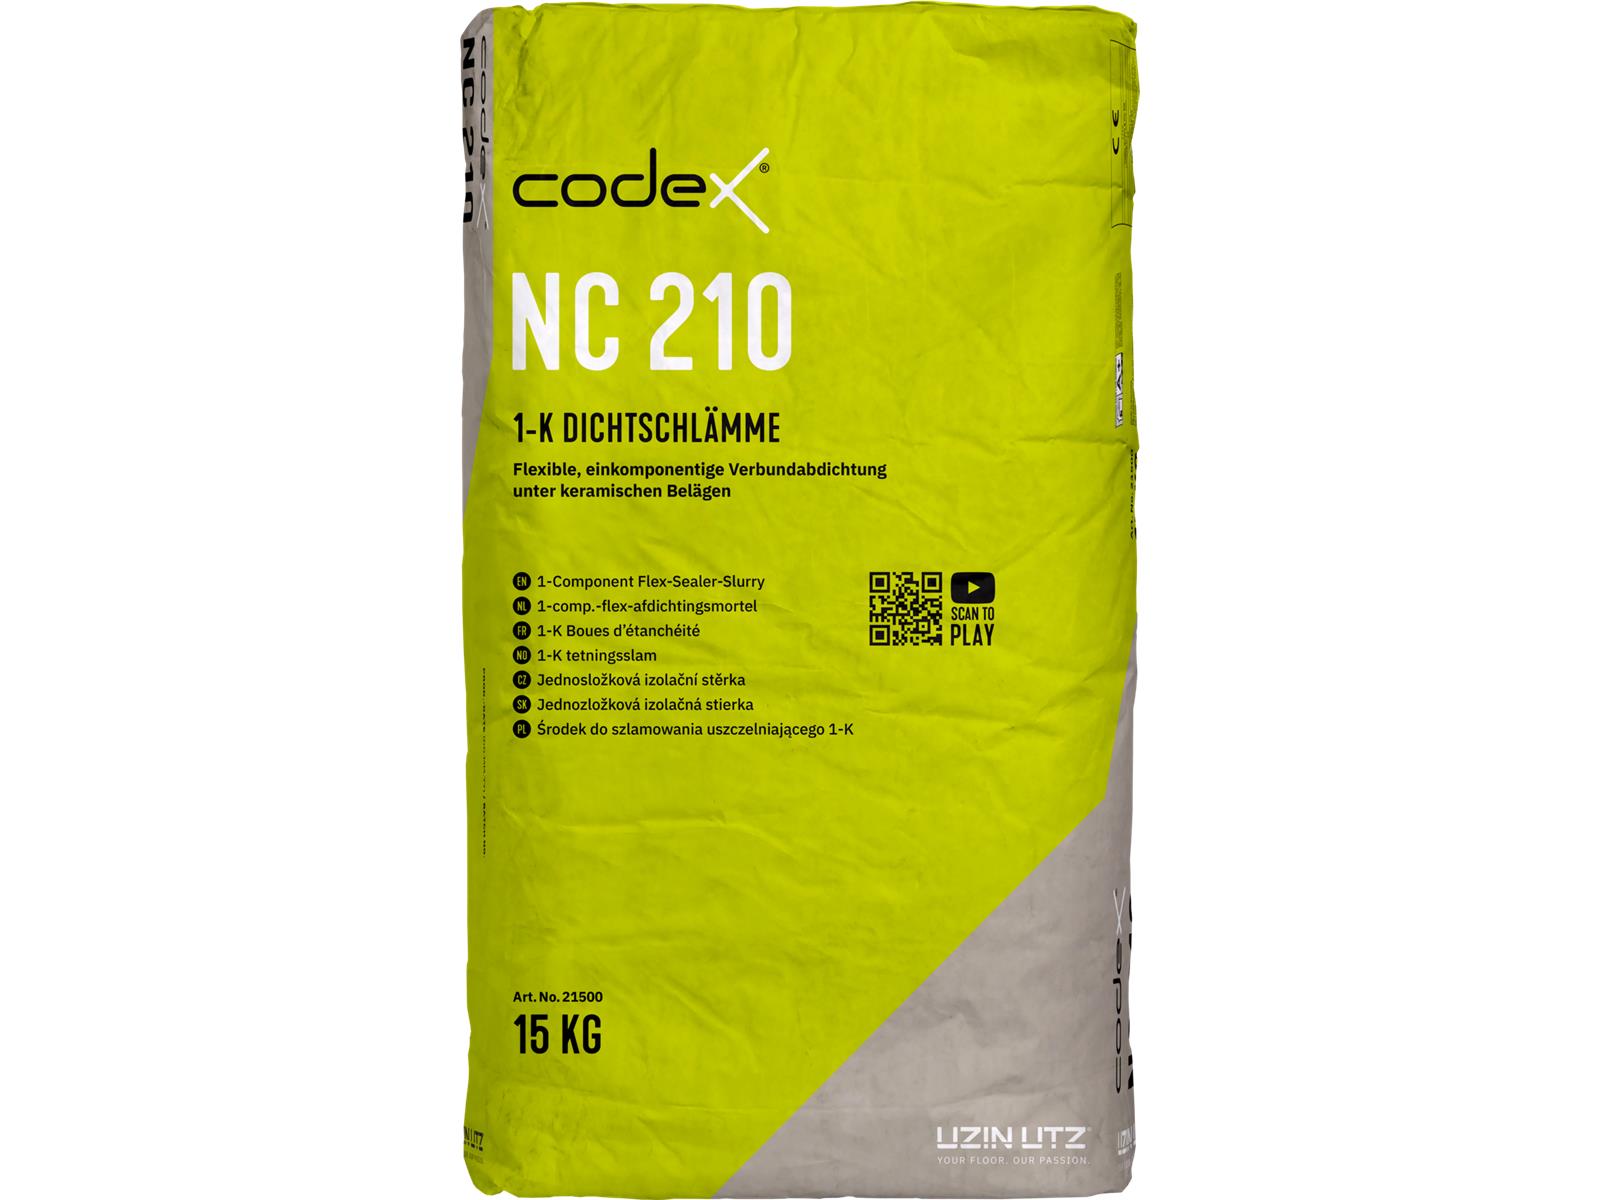 codex NC 210 - 15 kg